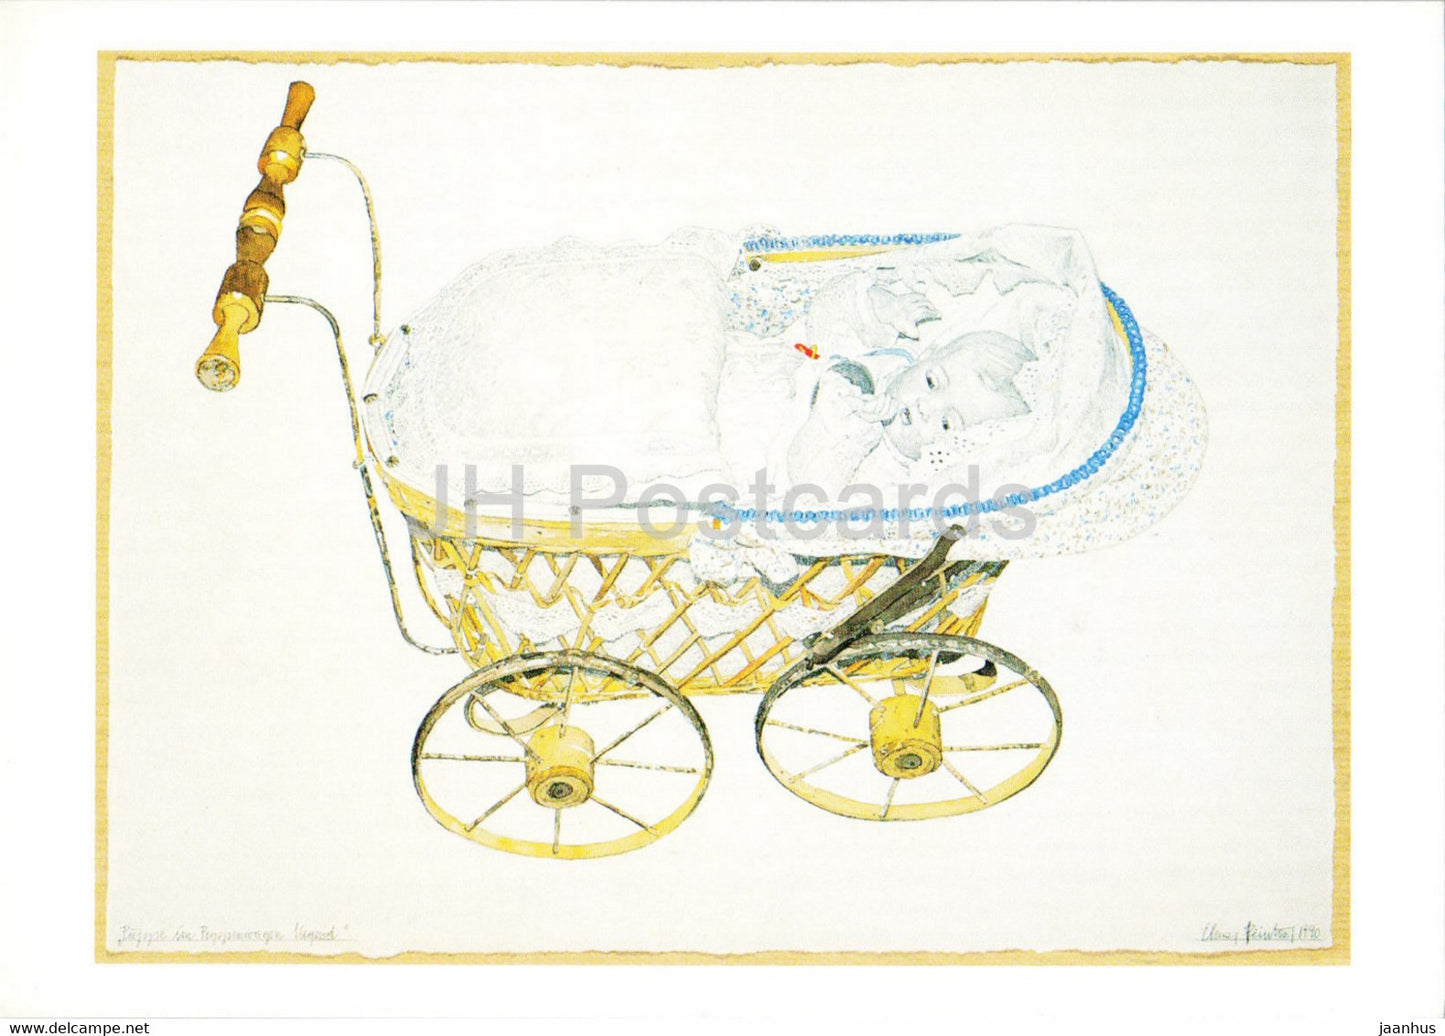 drawing by Elmar Peintner - Puppe im Puppenwagen liegend - stroller - baby - German art - Germany - unused - JH Postcards